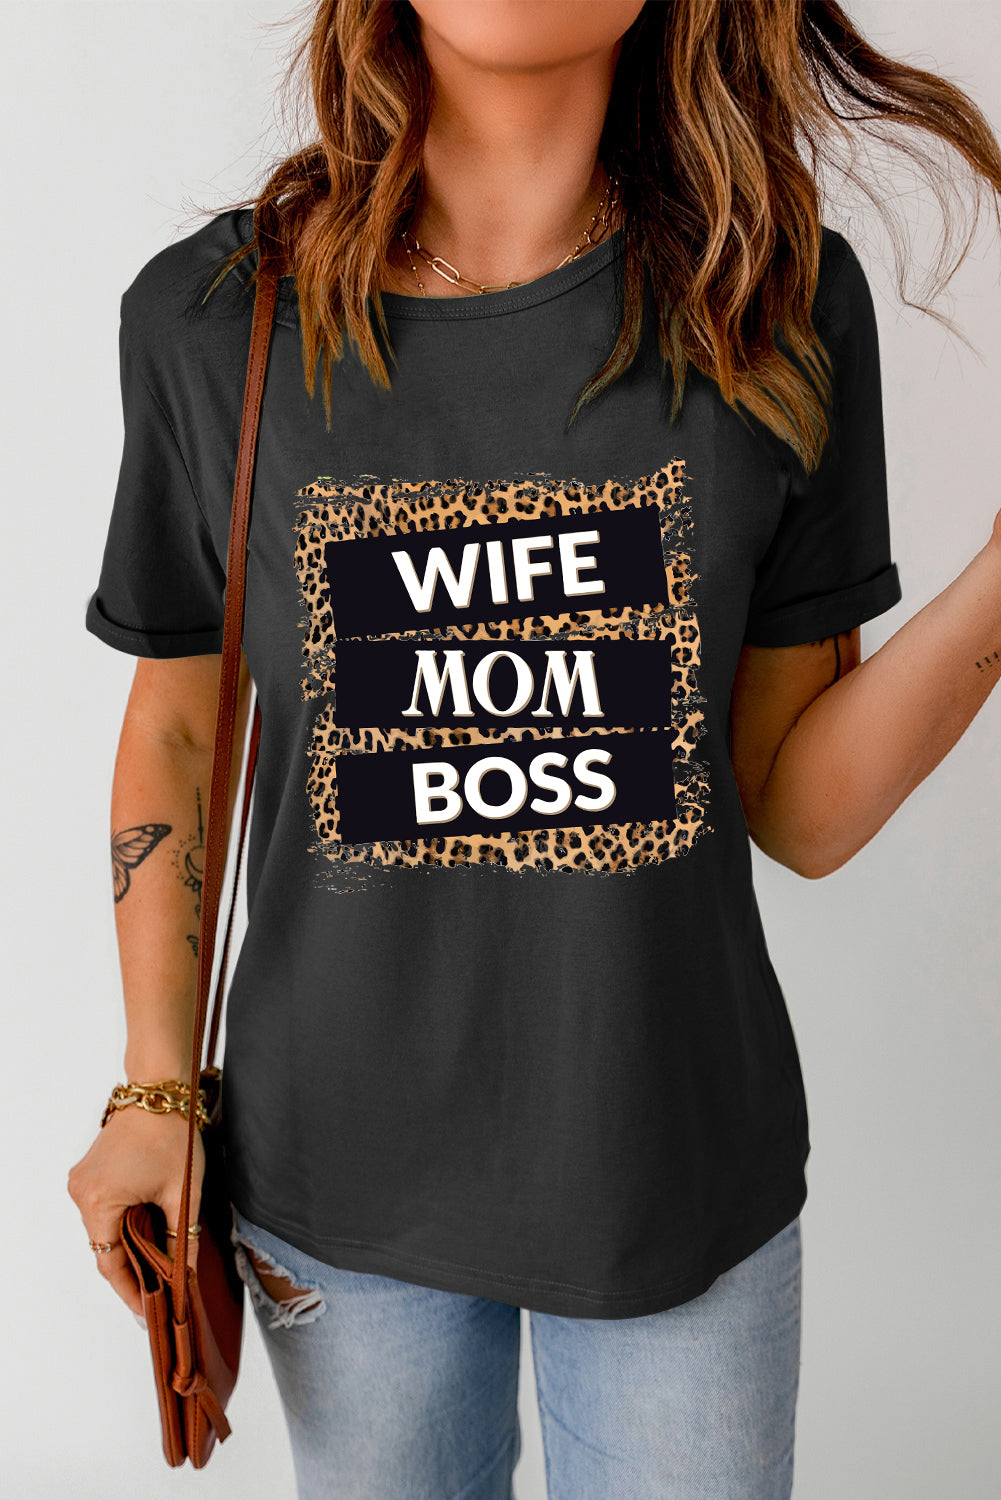 WIFE MOM BOSS Leopard Graphic Tee - TiffanyzKlozet